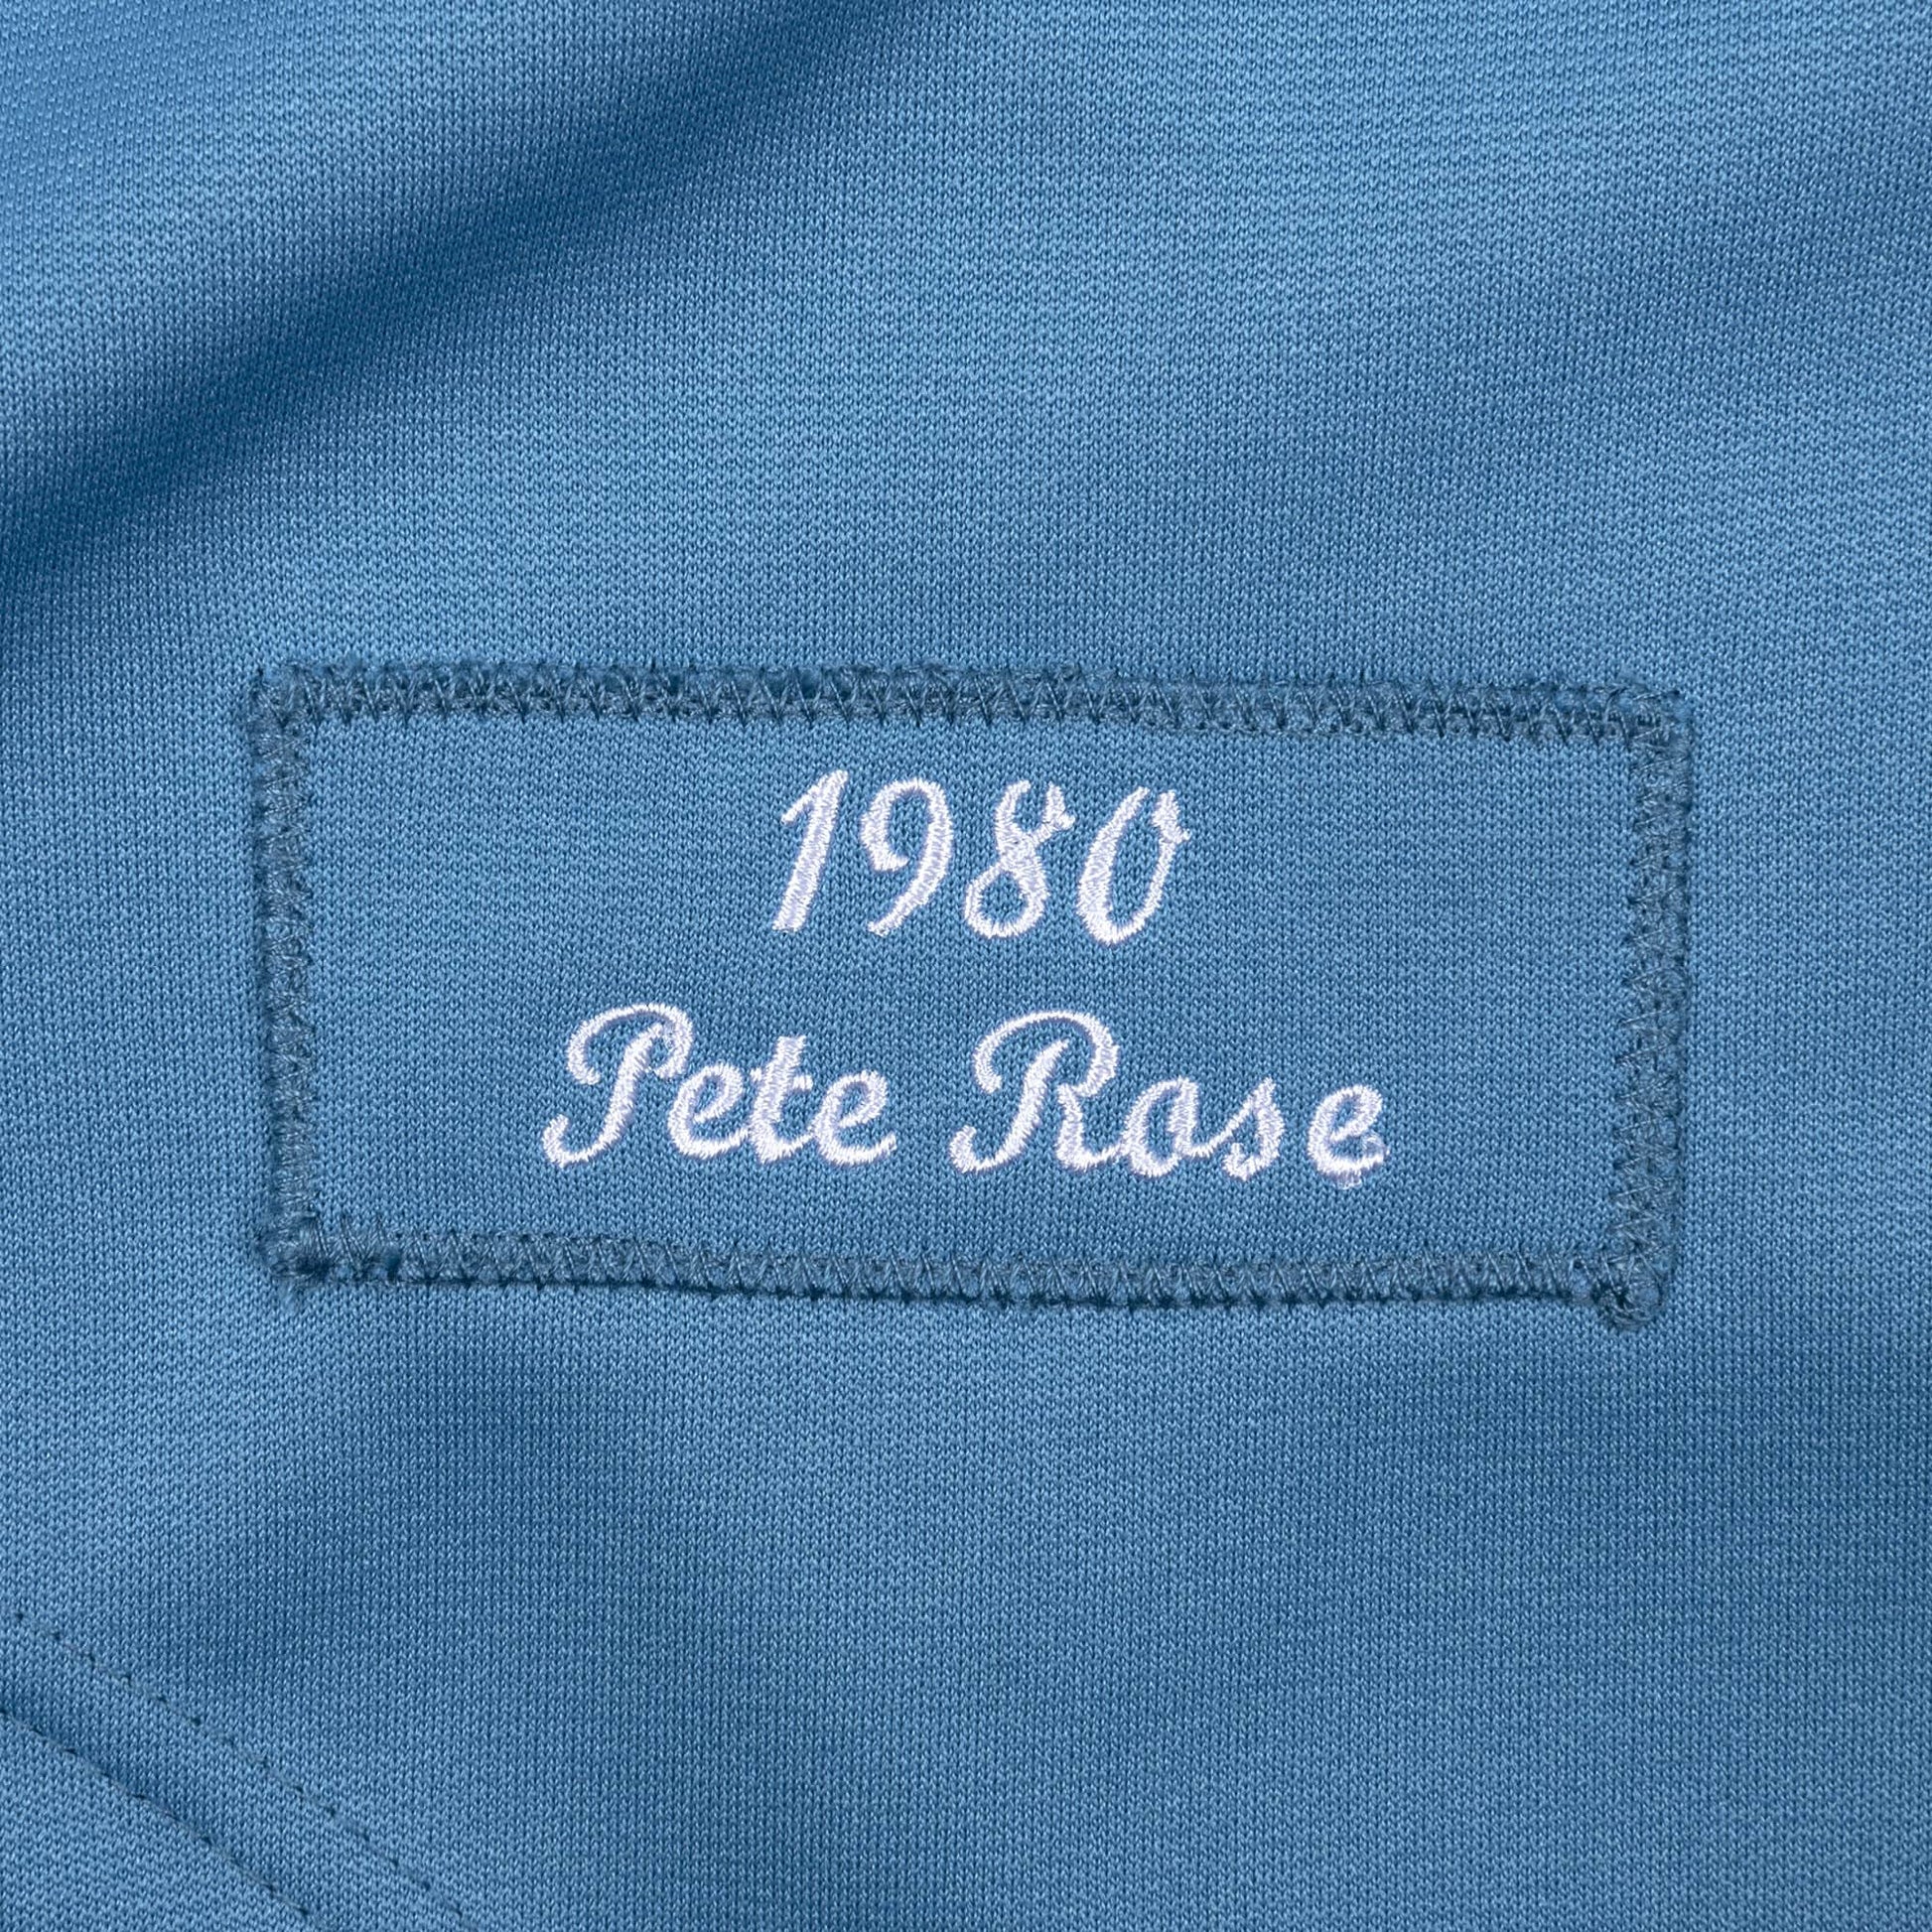 Authentic Jersey Philadelphia Phillies 1980 Pete Rose - Shop